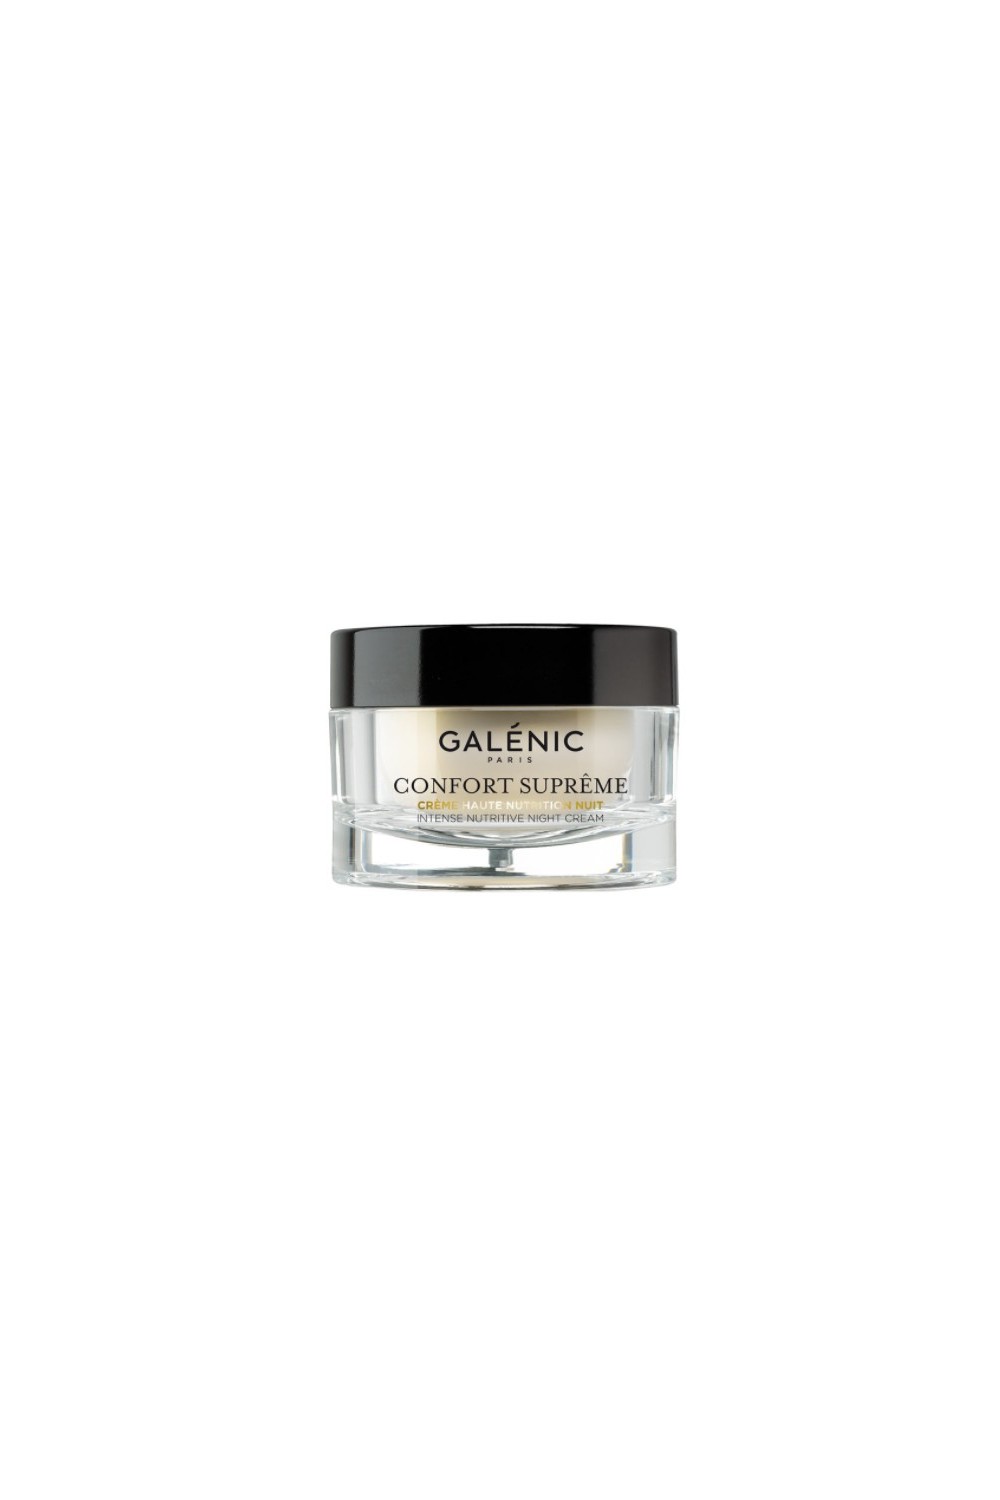 GALÉNIC - Galenic Confort Supreme Intense Nutritive Night Cream 50ml